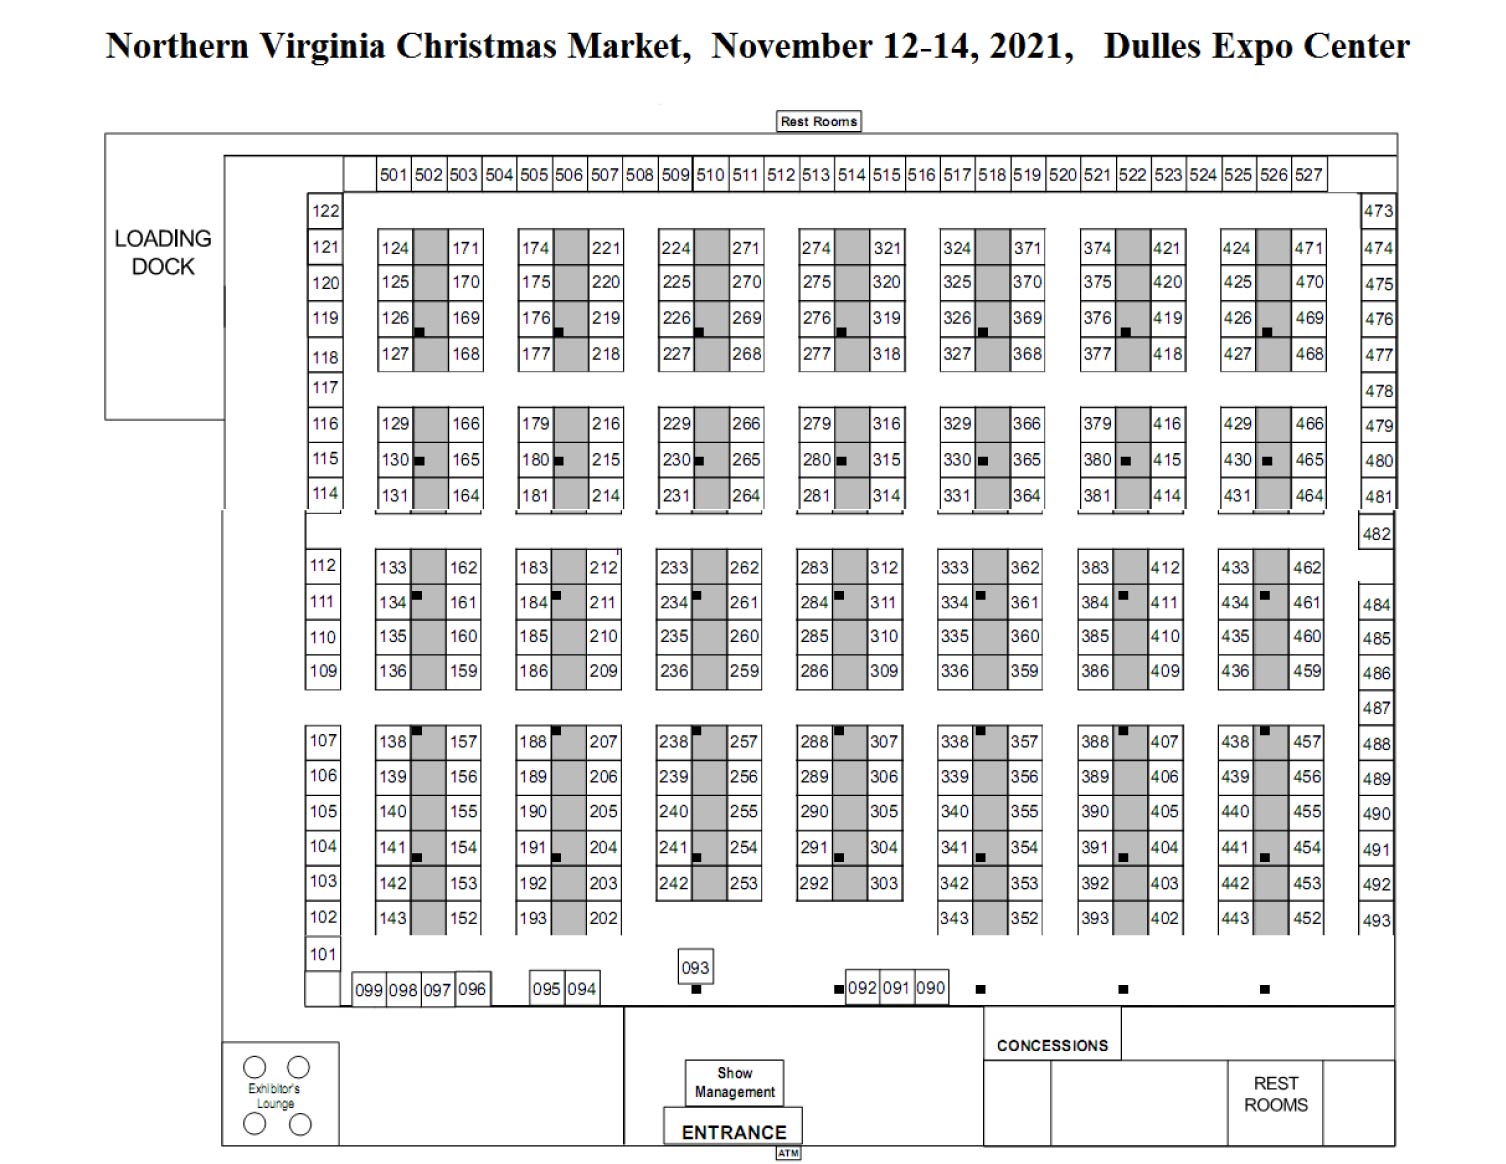 "2021 Northern Virginia Christmas Market Floorplan"